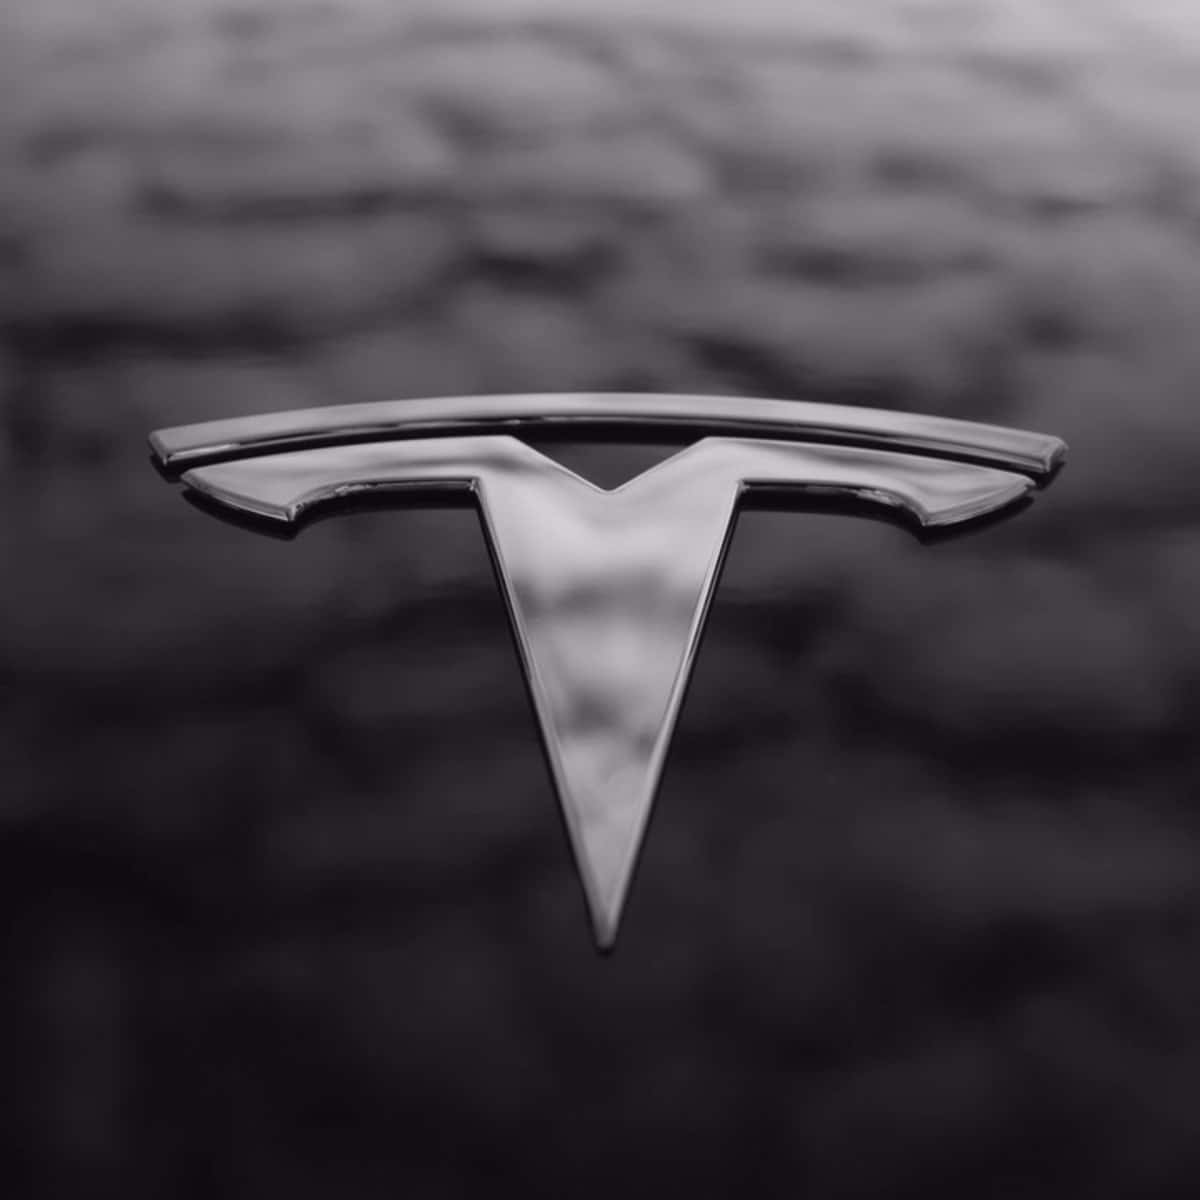 20 Tesla Logo Wallpapers  WallpaperSafari